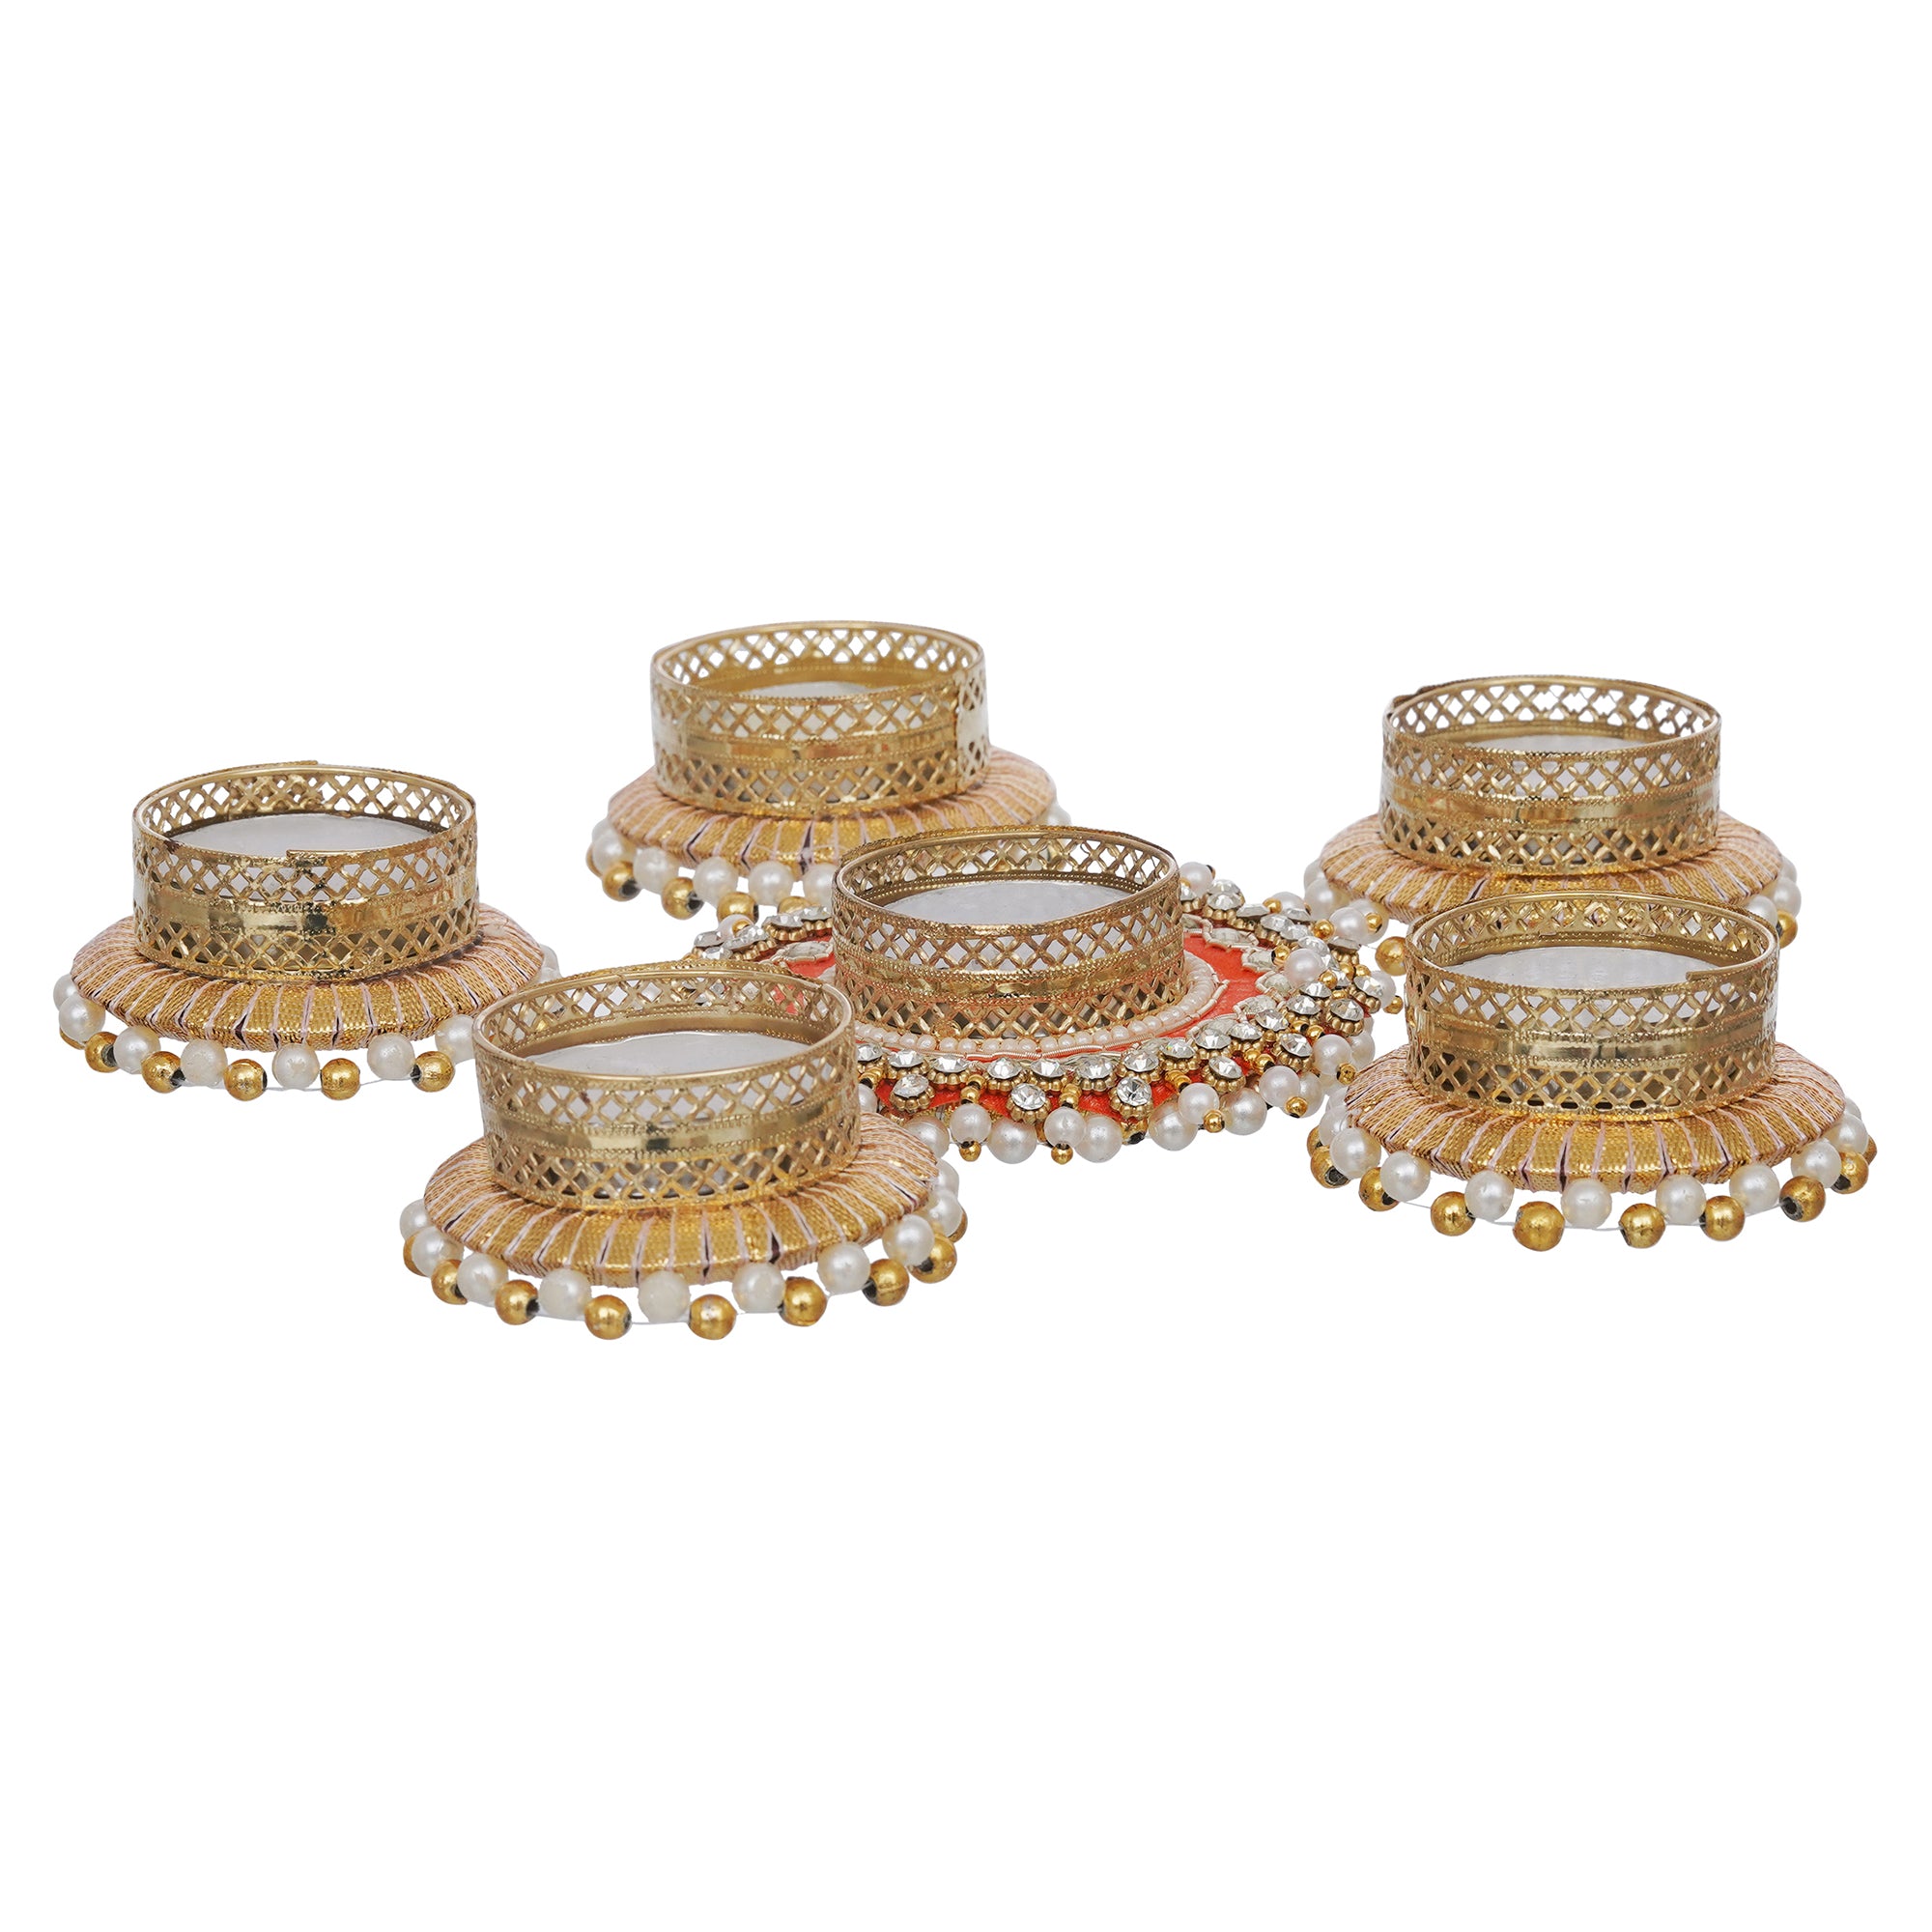 eCraftIndia Set of 6 Round Shaped Diamond Beads and Pearls Decorative Tea Light Candle Holders 7